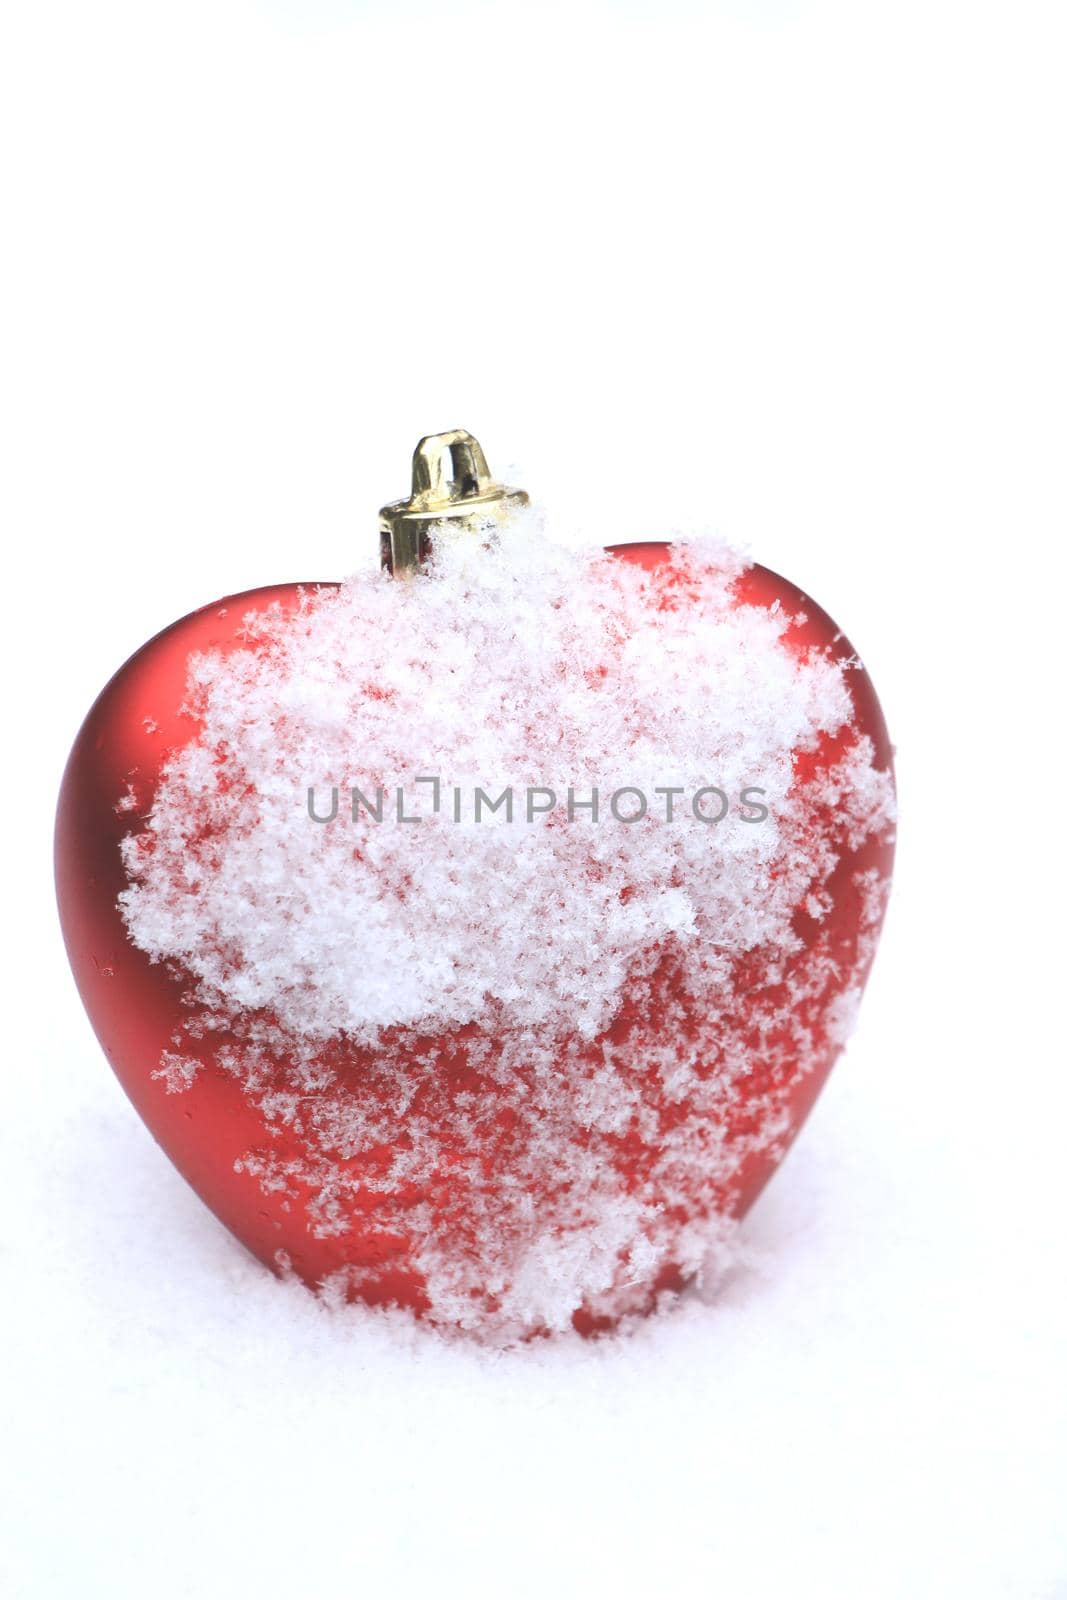 Red heart shaped ornament in fresh fallen snow